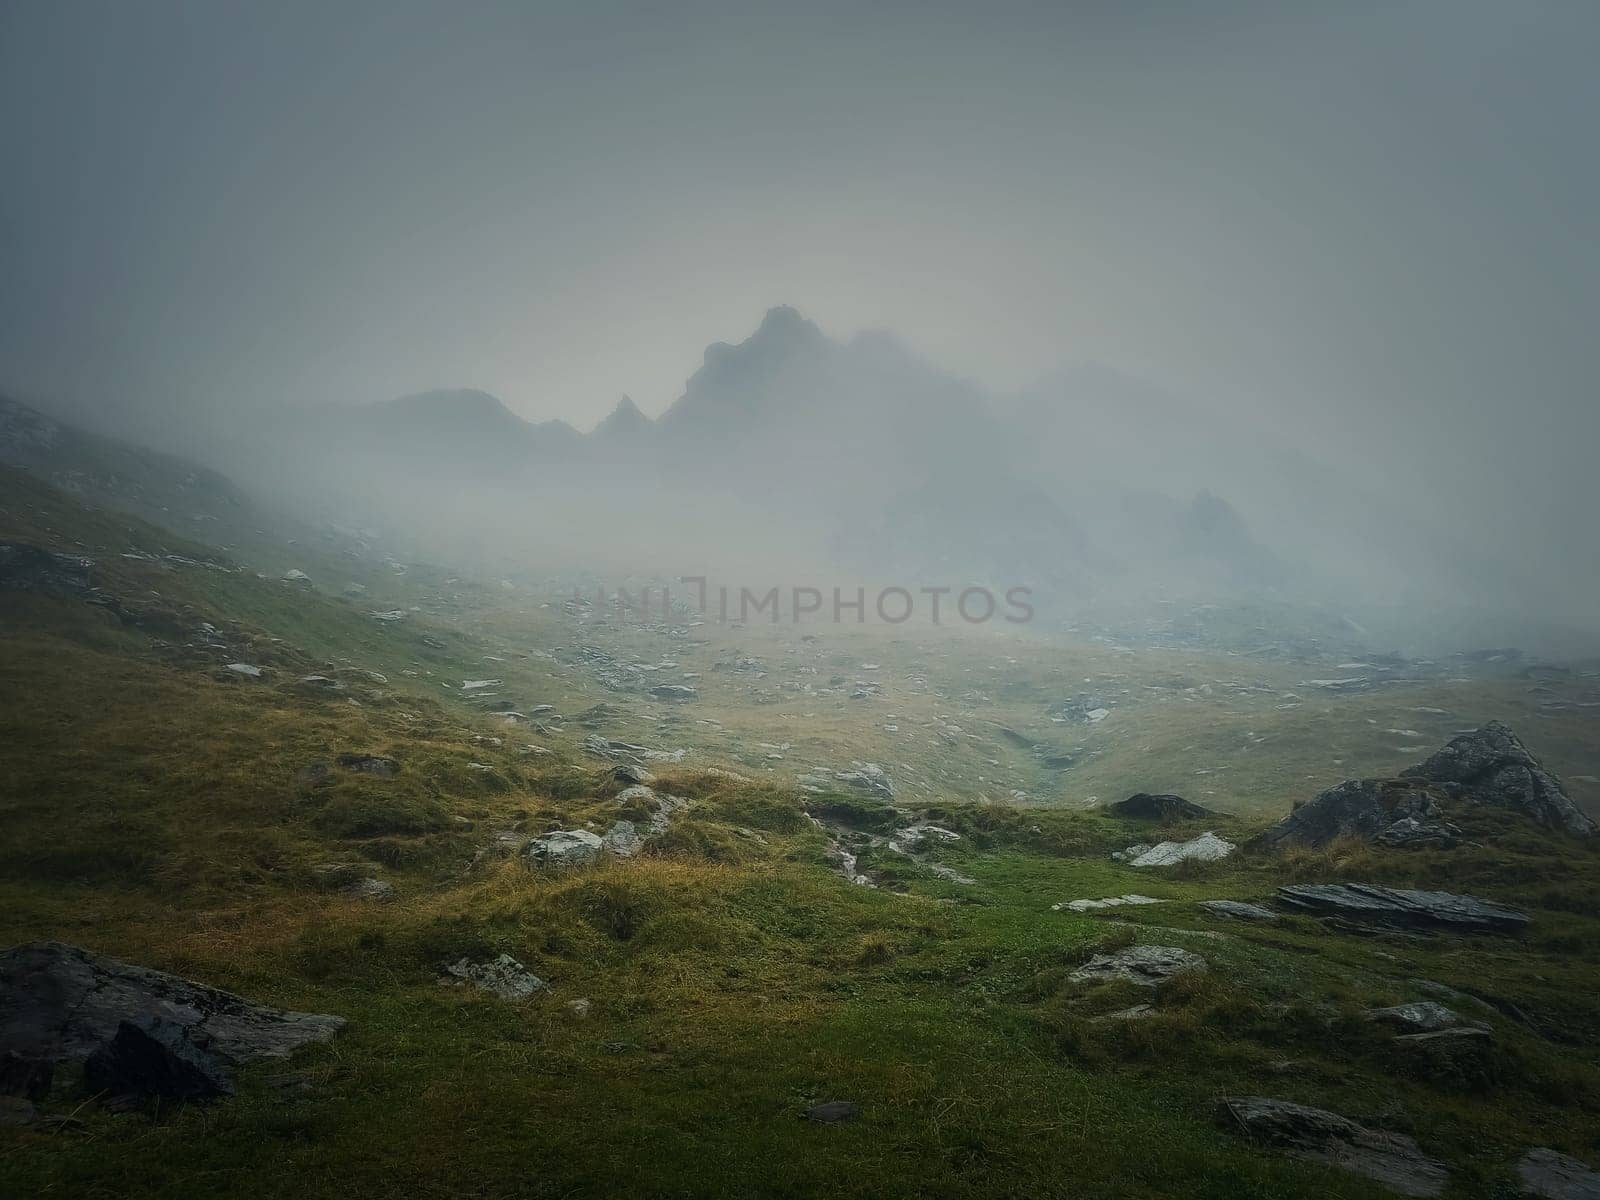 Mountain peak seen through the dense fog. Rainy scene in the mounts, hiking in the mist landscape by psychoshadow